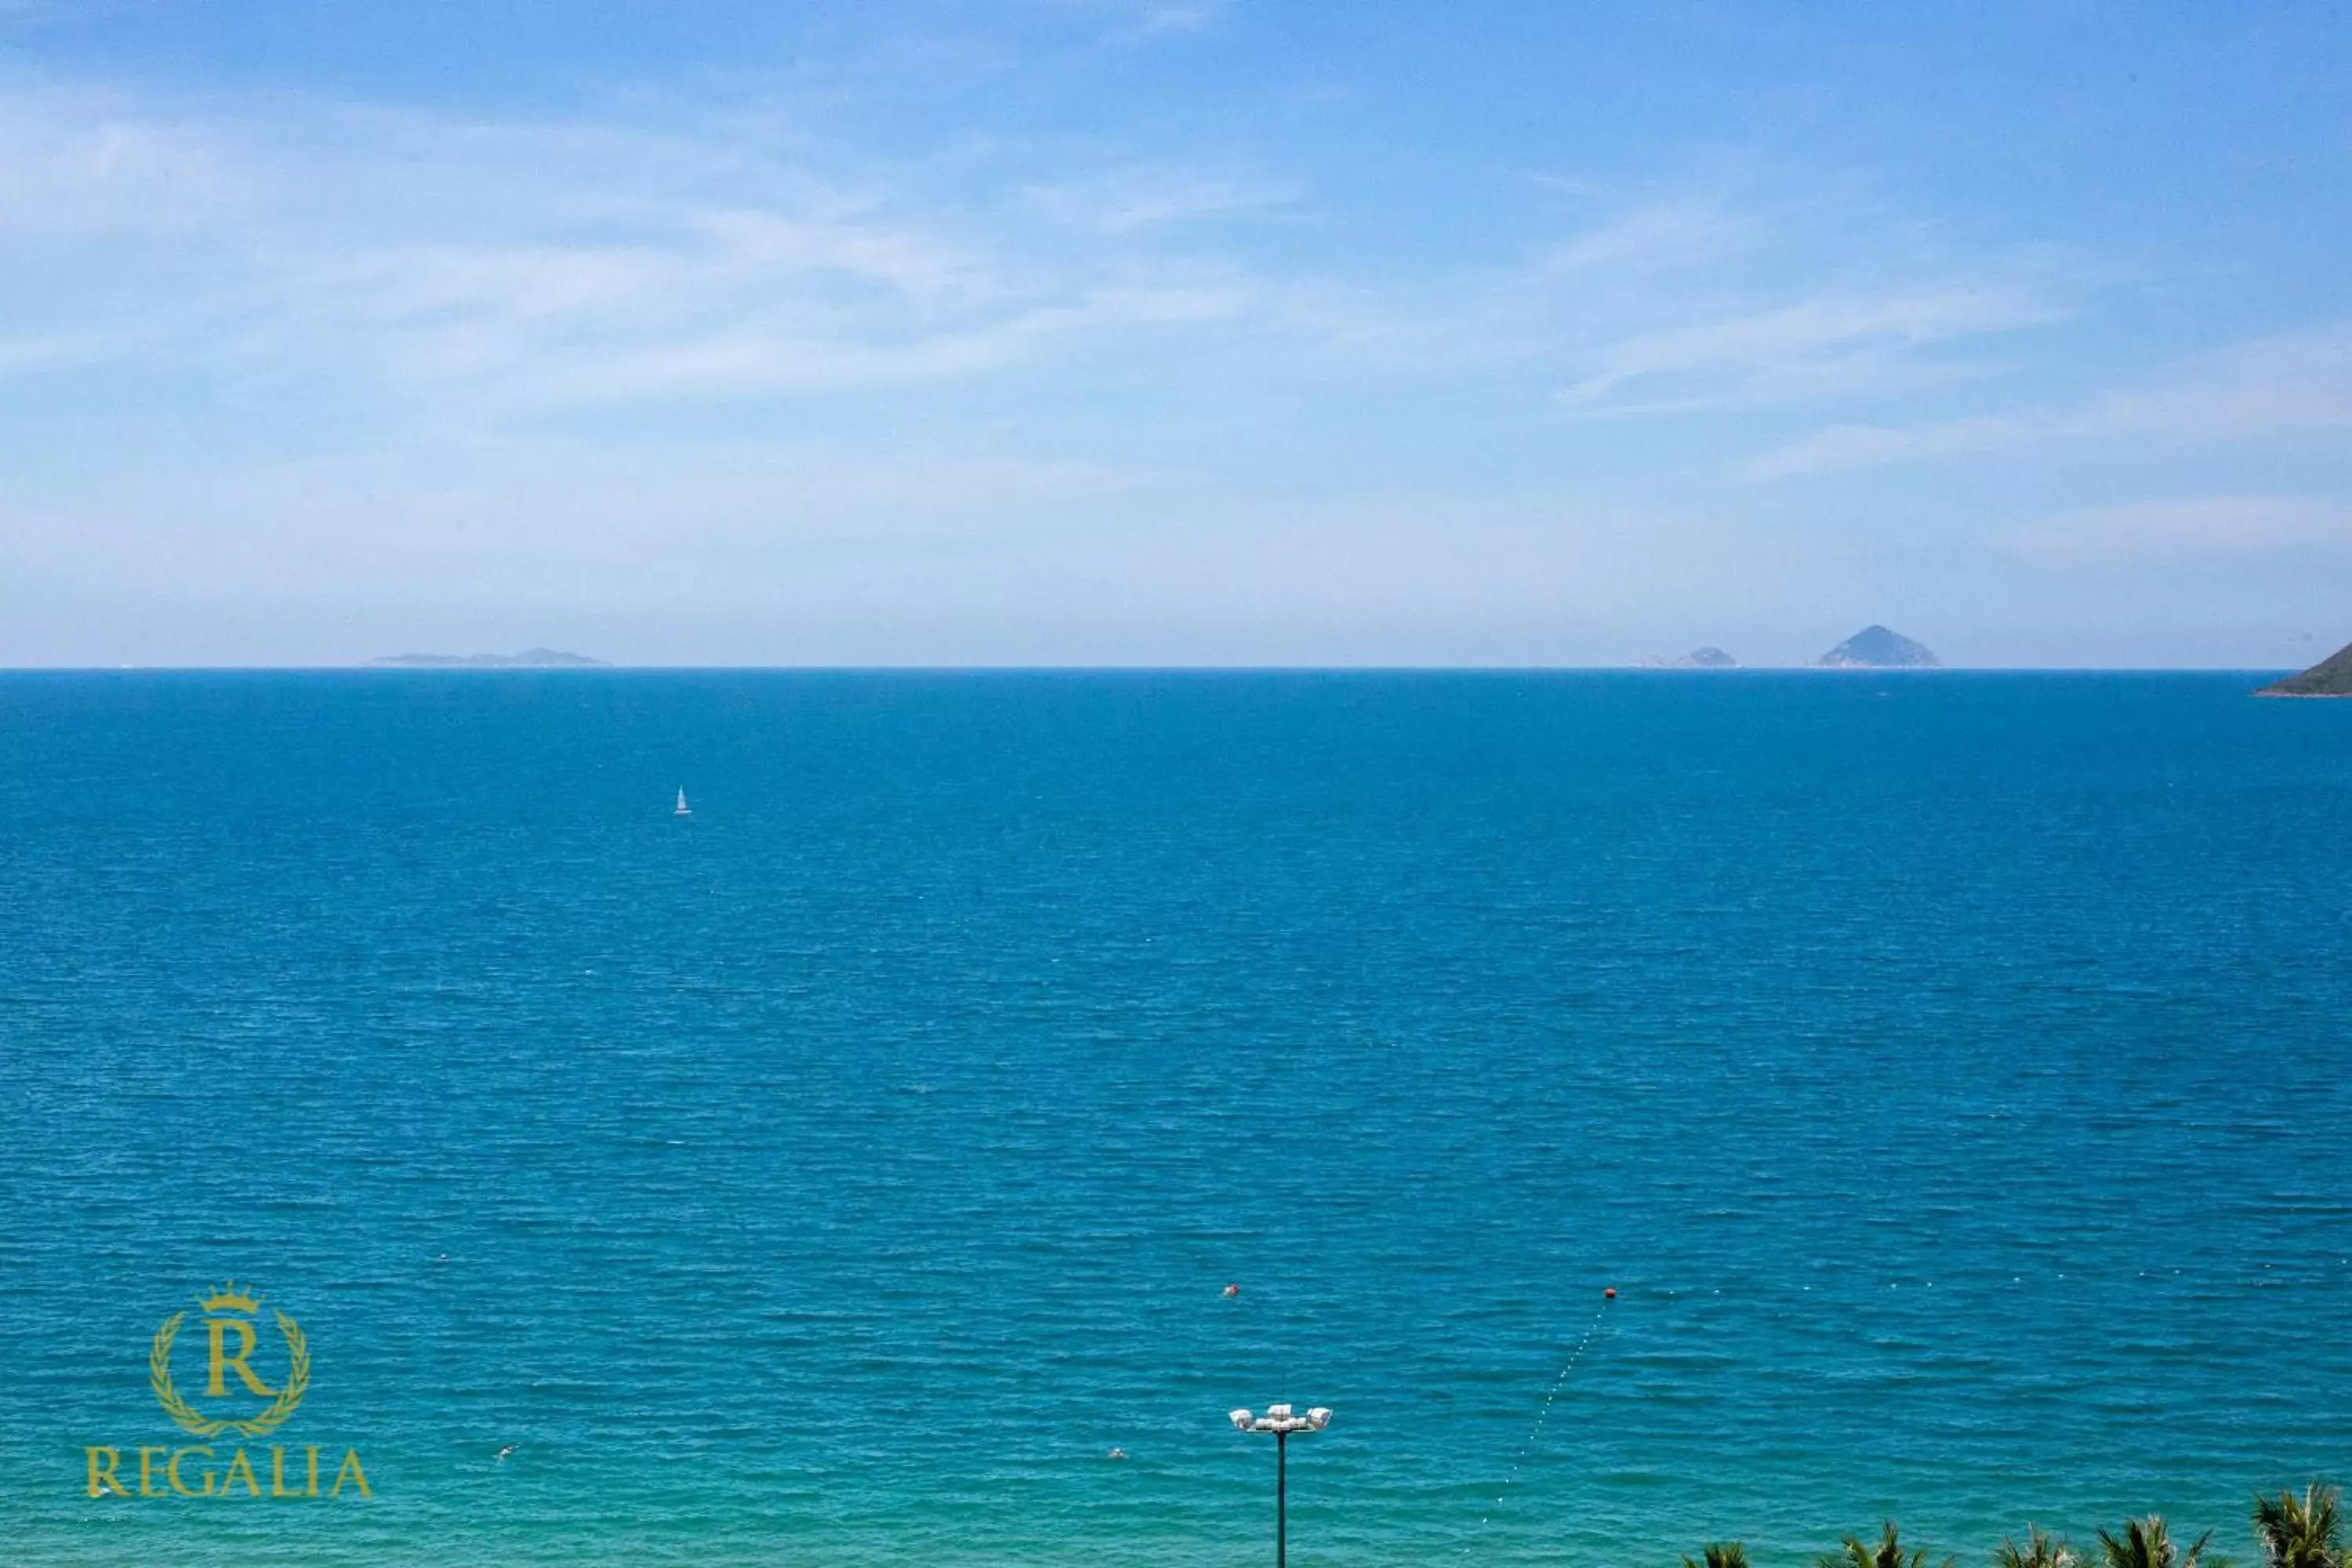 Sea View in Regalia Nha Trang